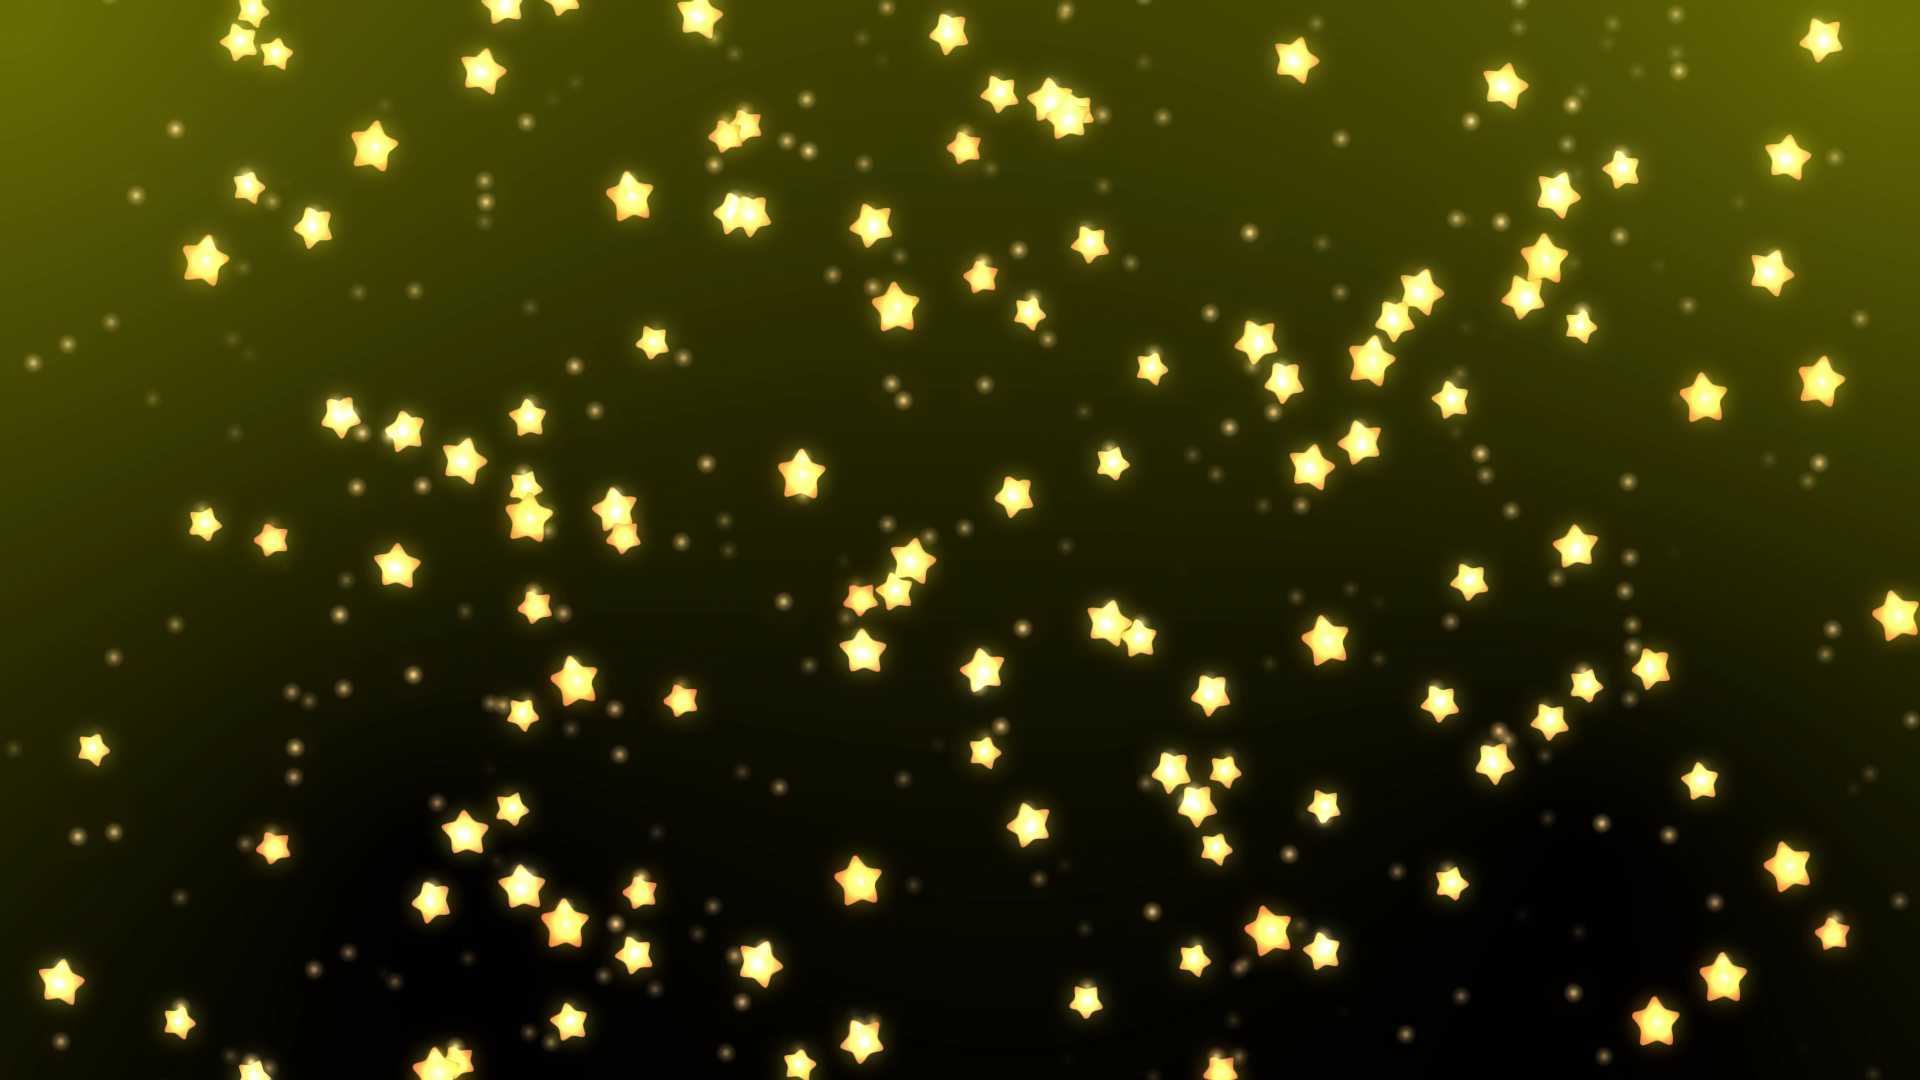 4K Falling Stars Motion Background || VFX Free To Use 4K Screensaver || FREE DOWNLOAD